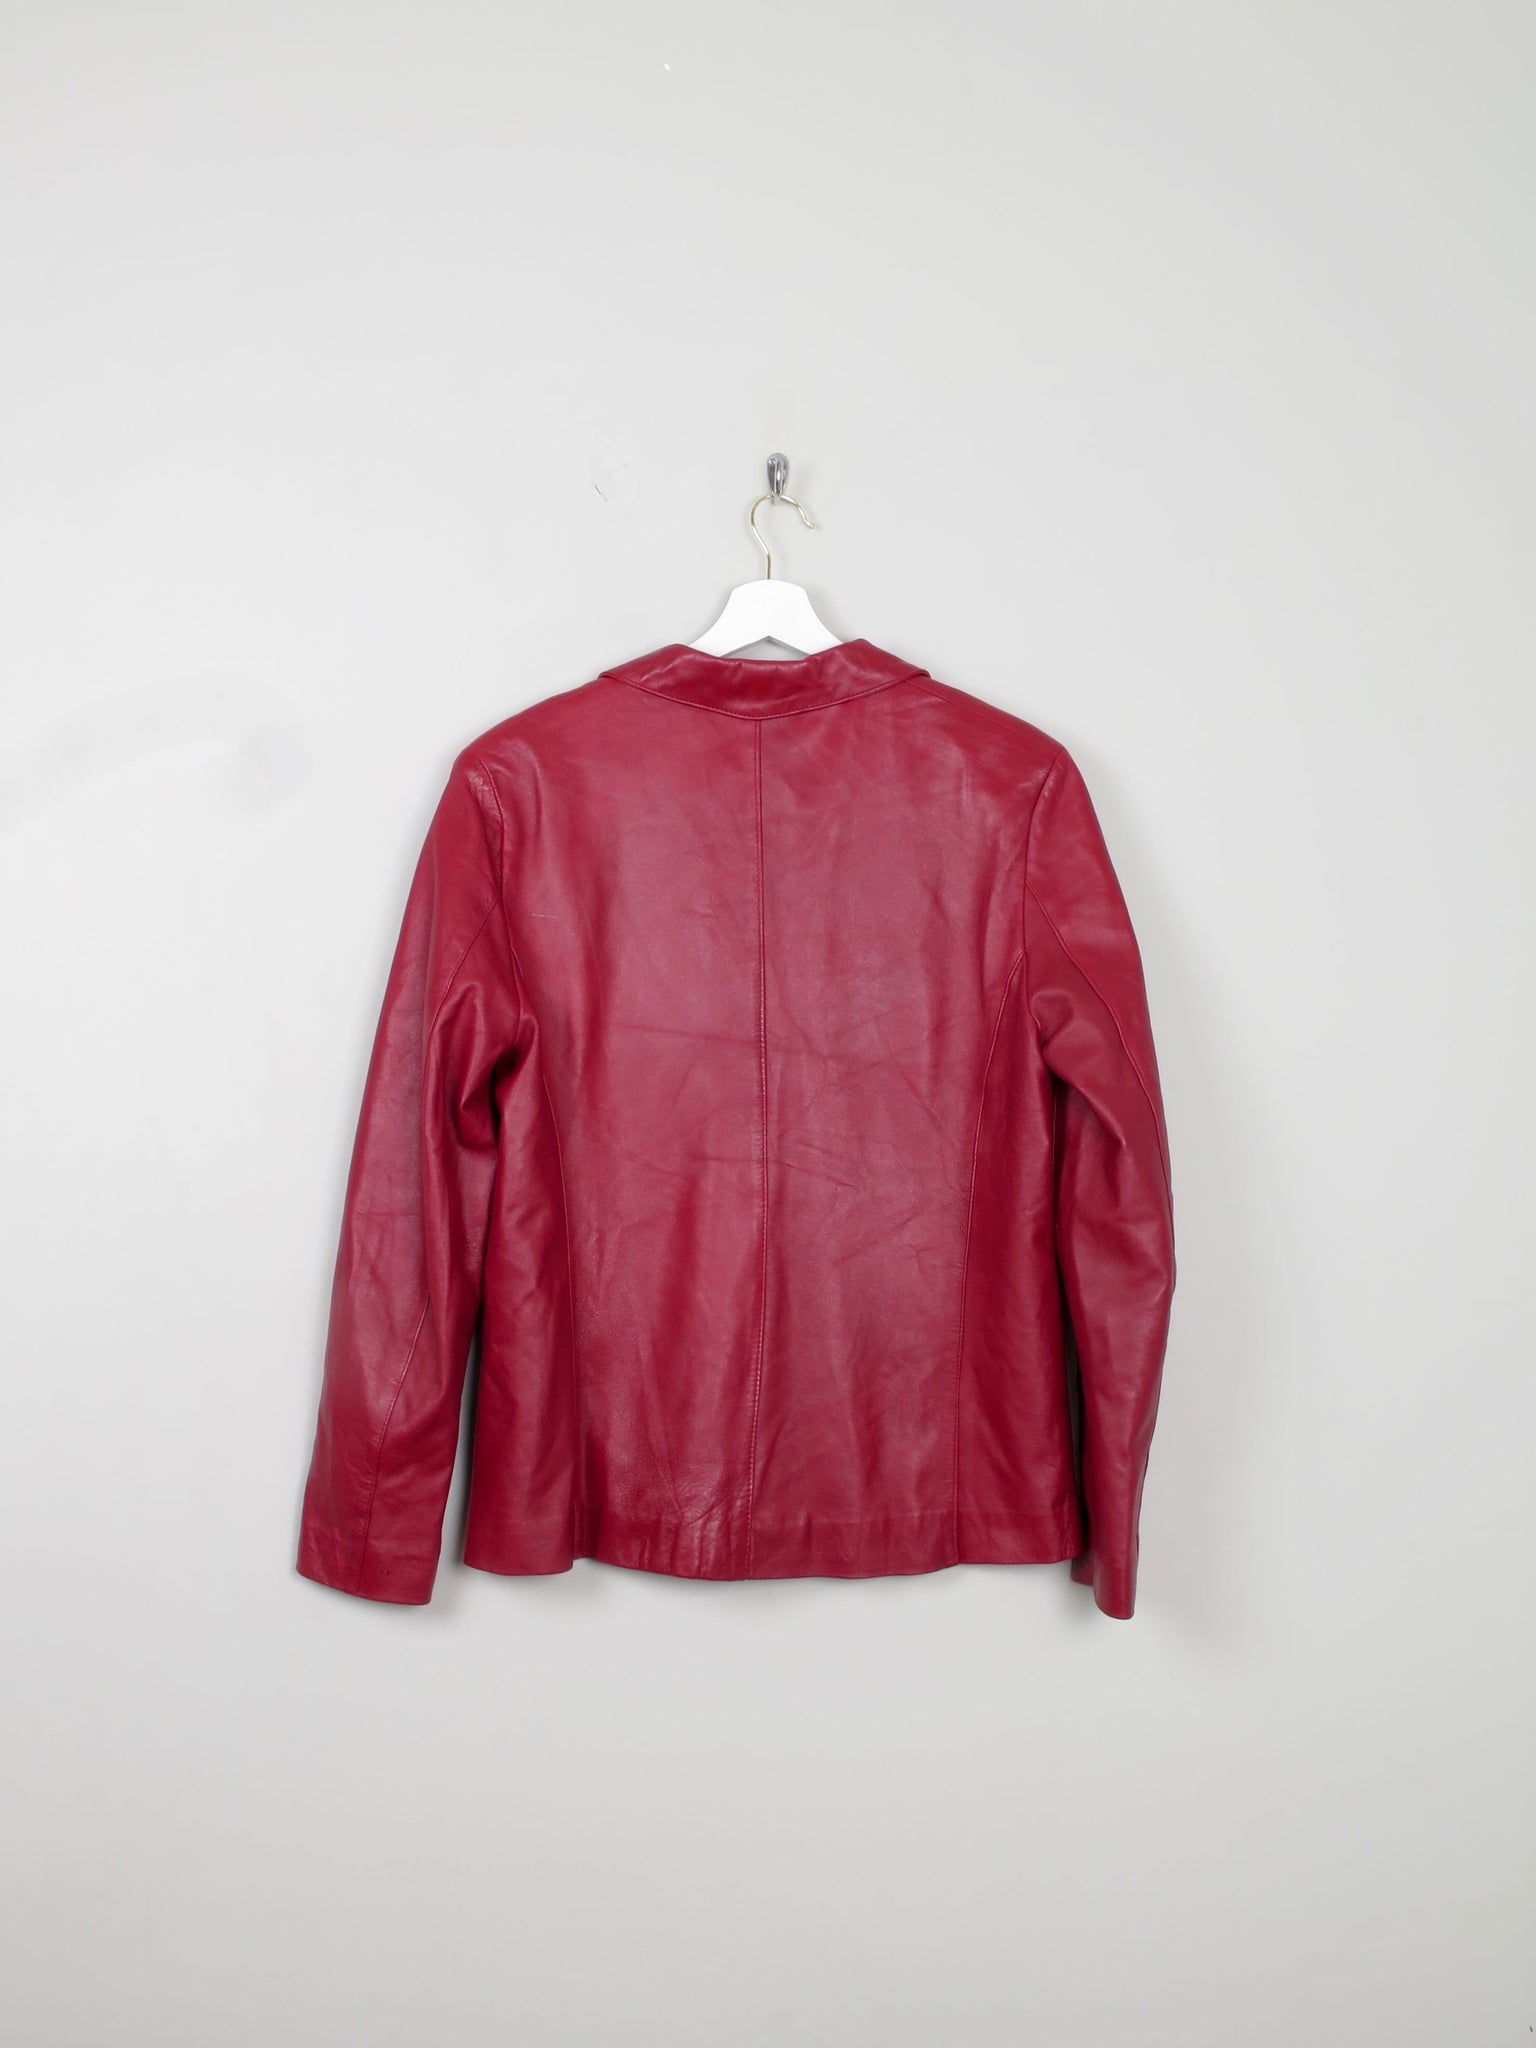 Women's Vintage Deep Red Leather Jacket M/L